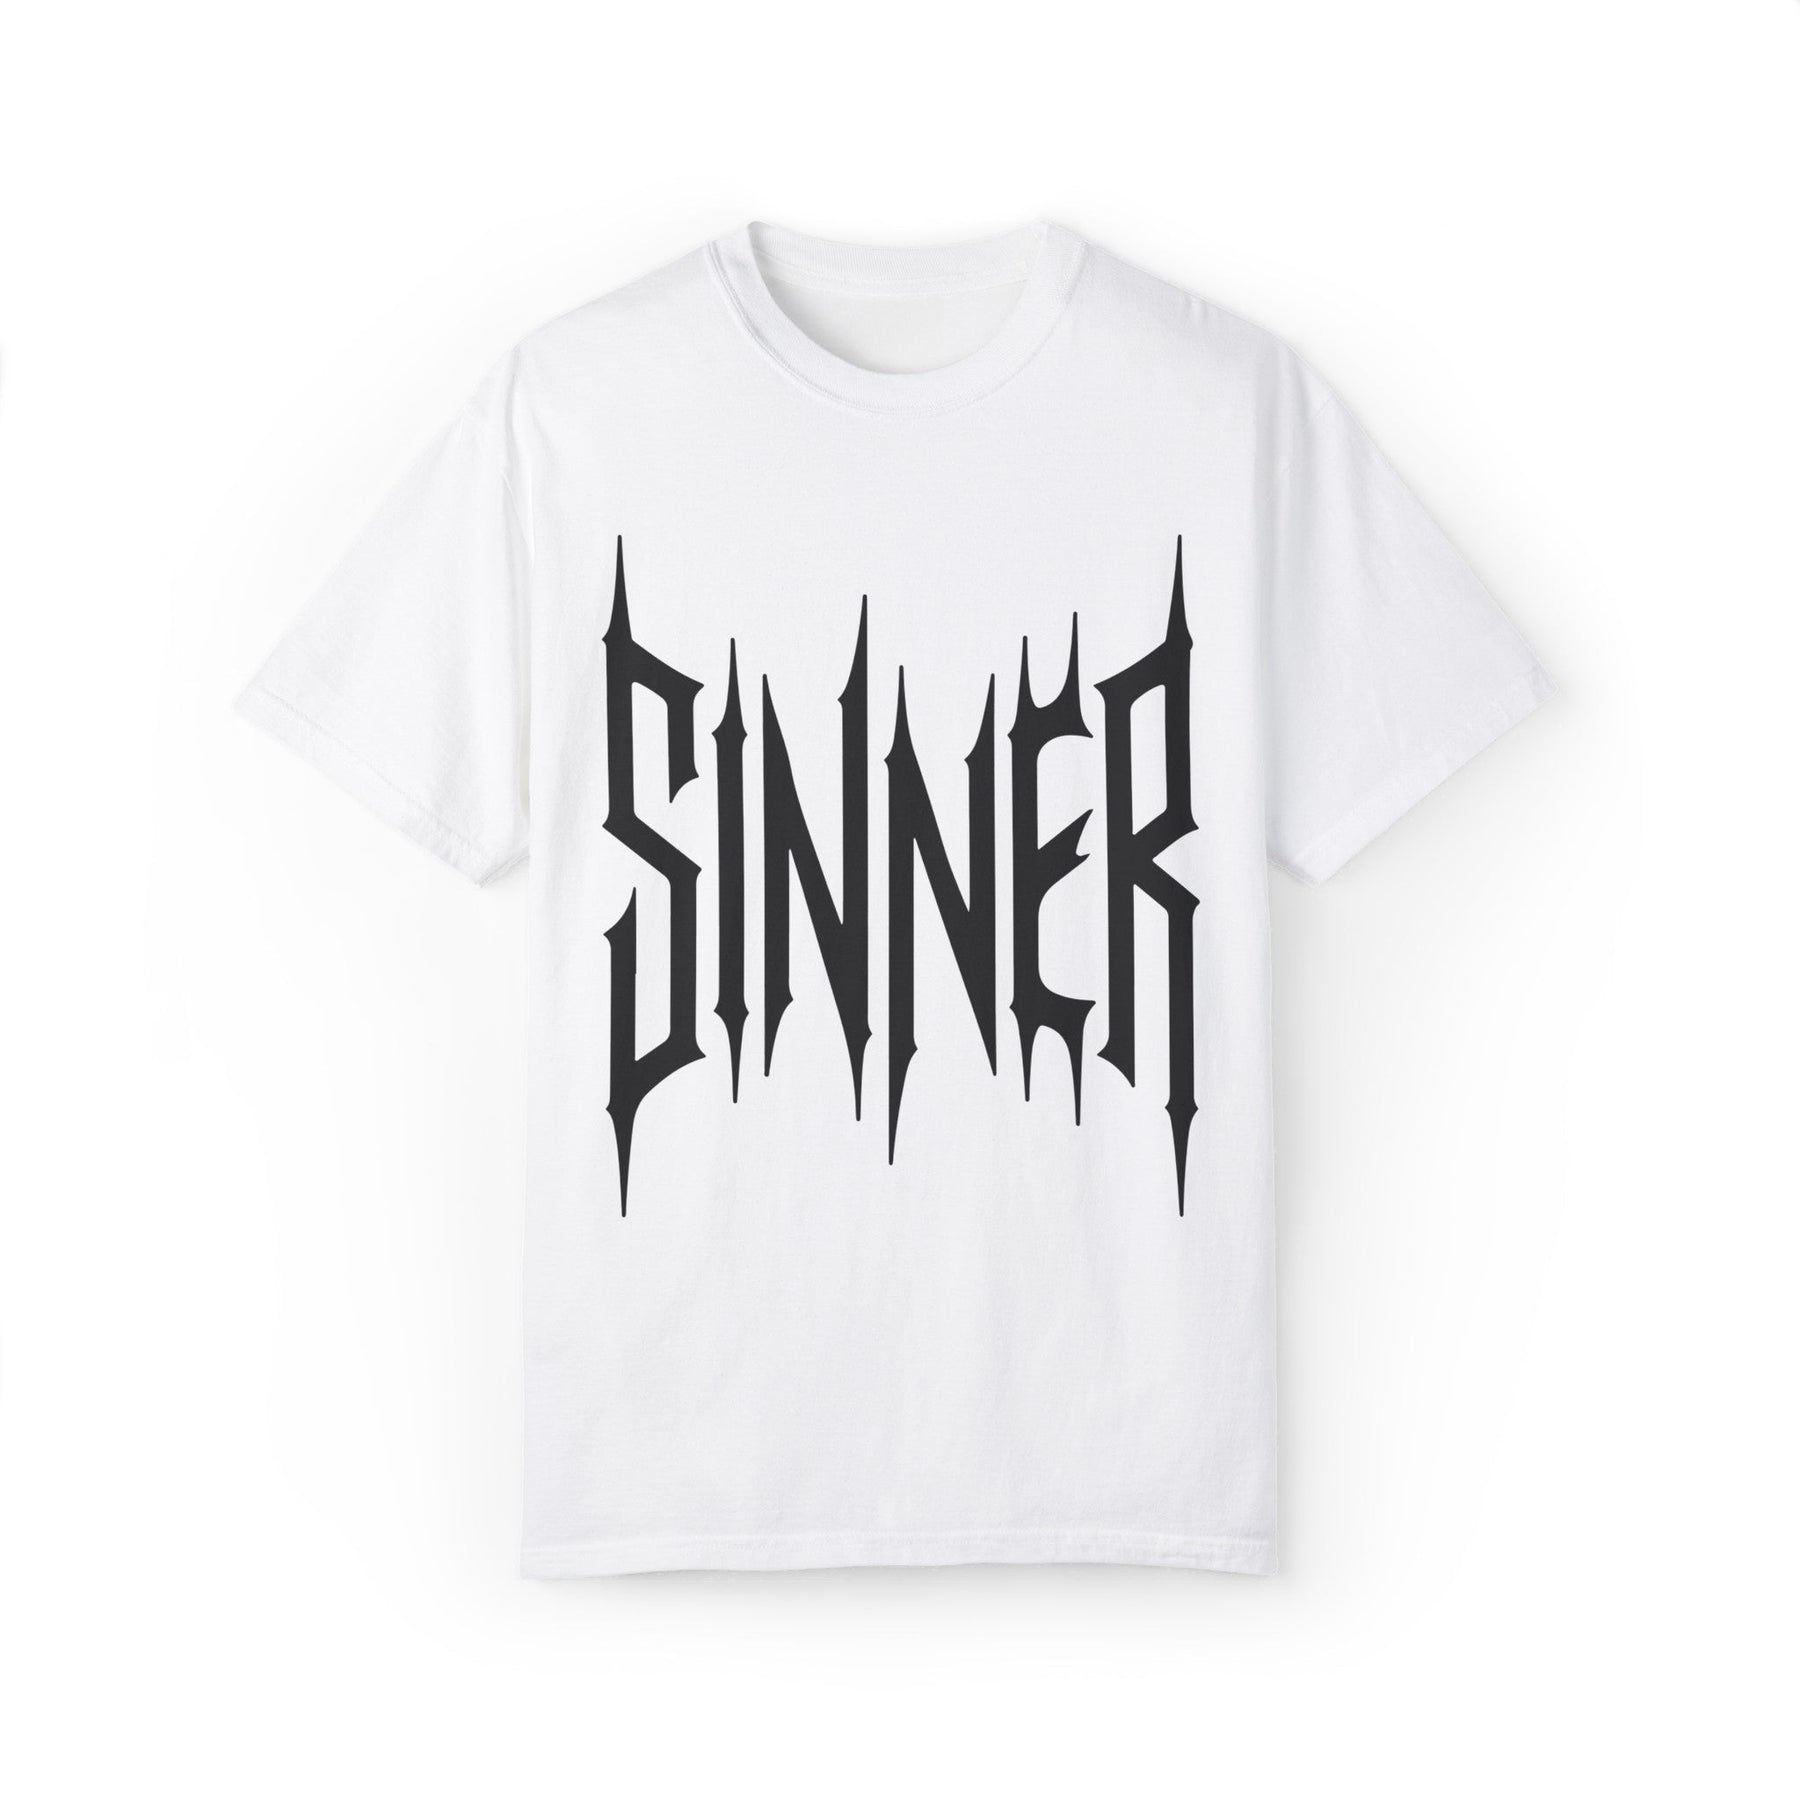 Sinner Oversized Beefy Tee - Goth Cloth Co.T - Shirt29300741790297194798